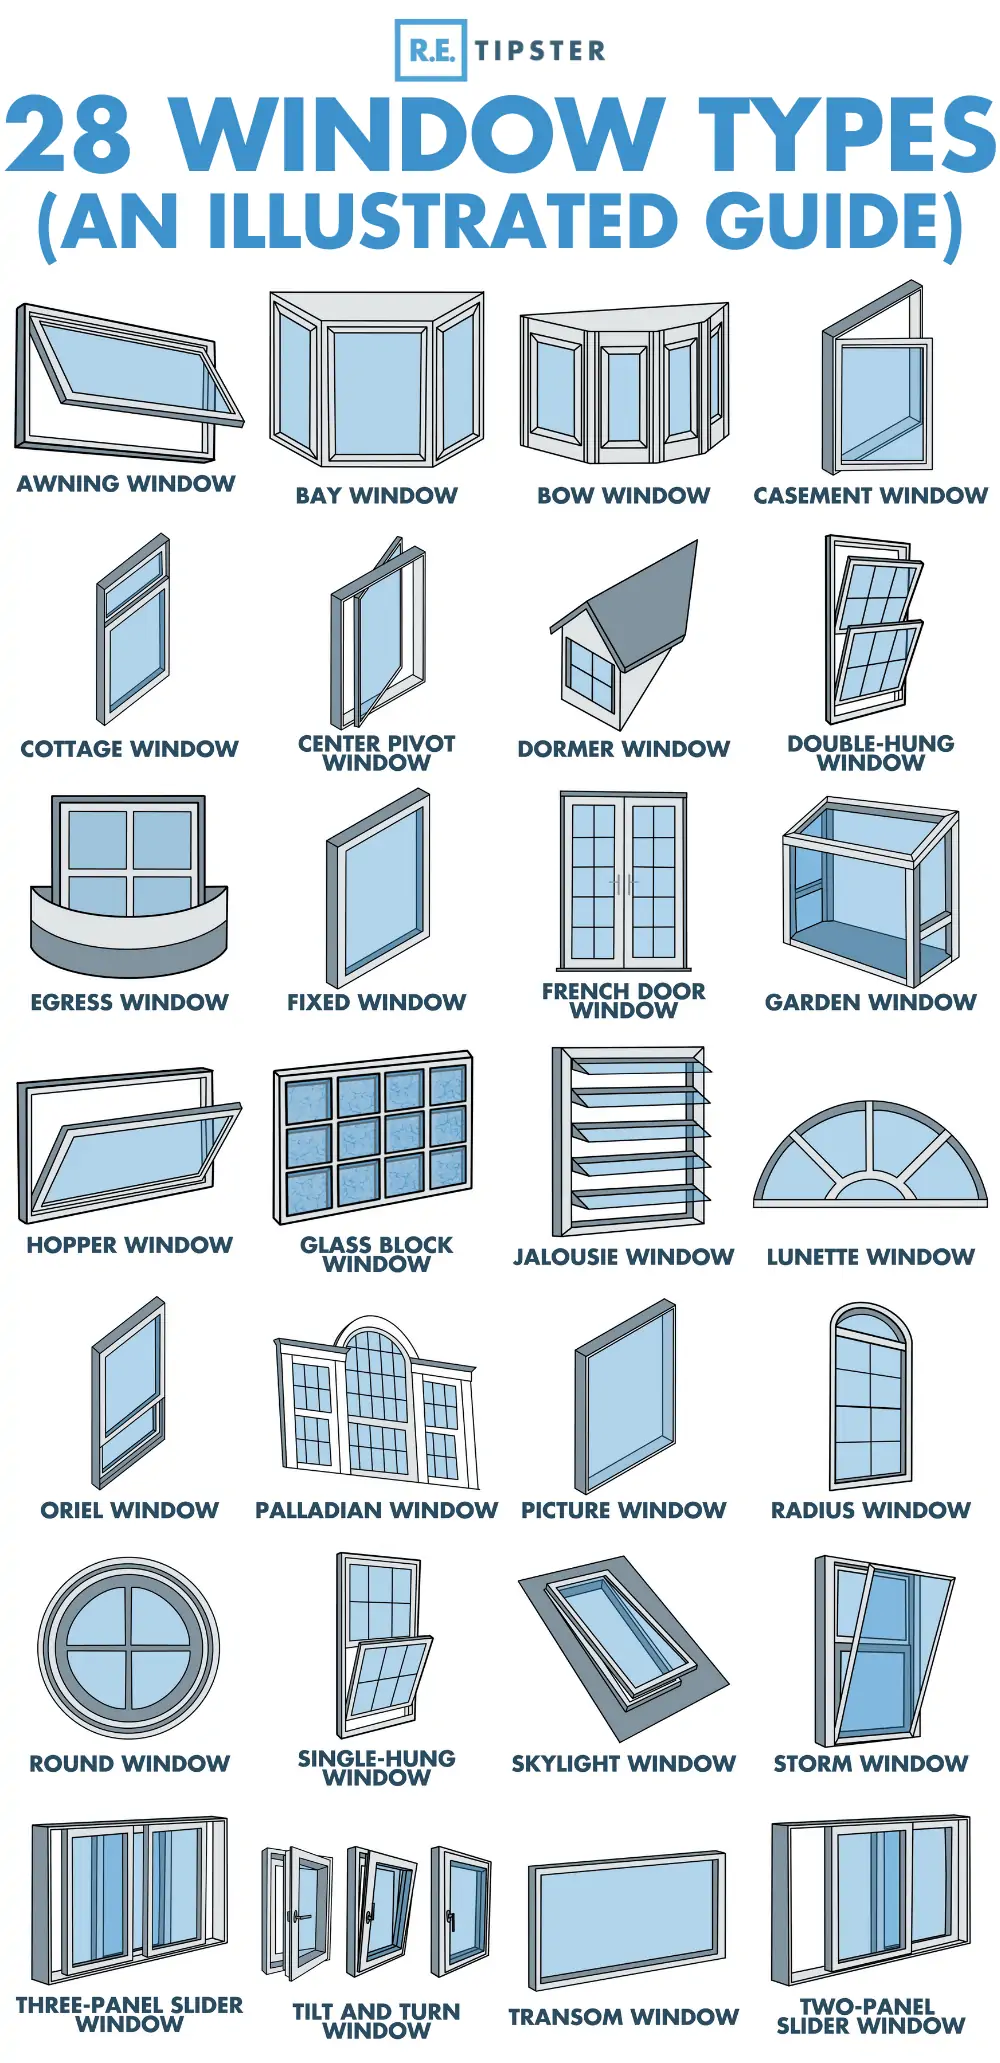 28 Window Types REtipster